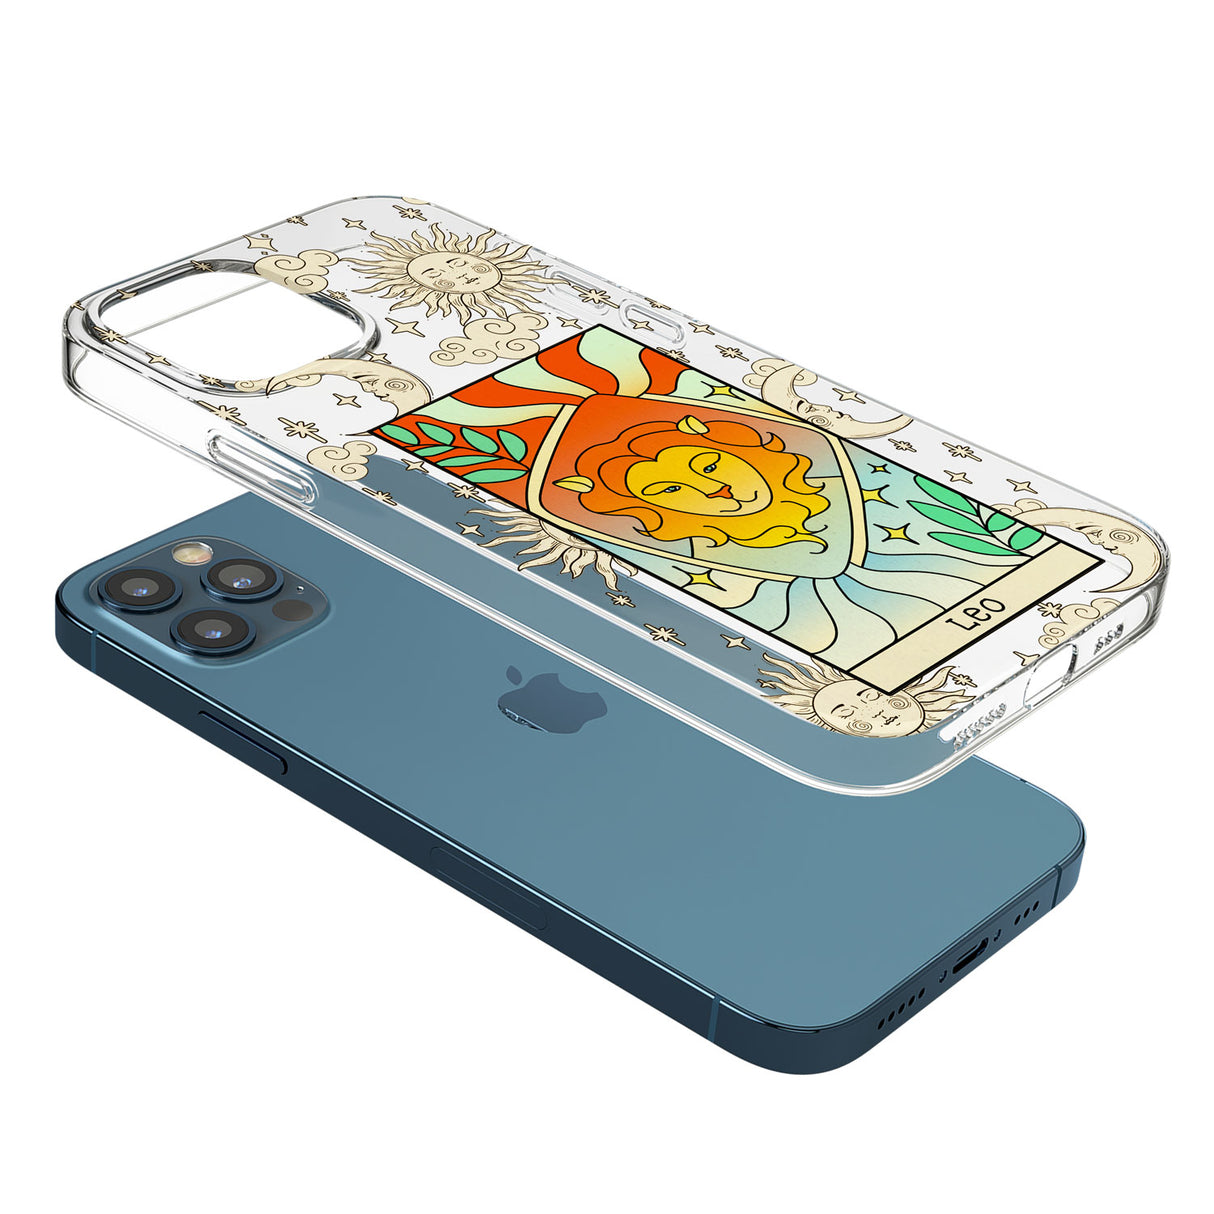 Celestial Zodiac - Leo Phone Case for iPhone 12 Pro